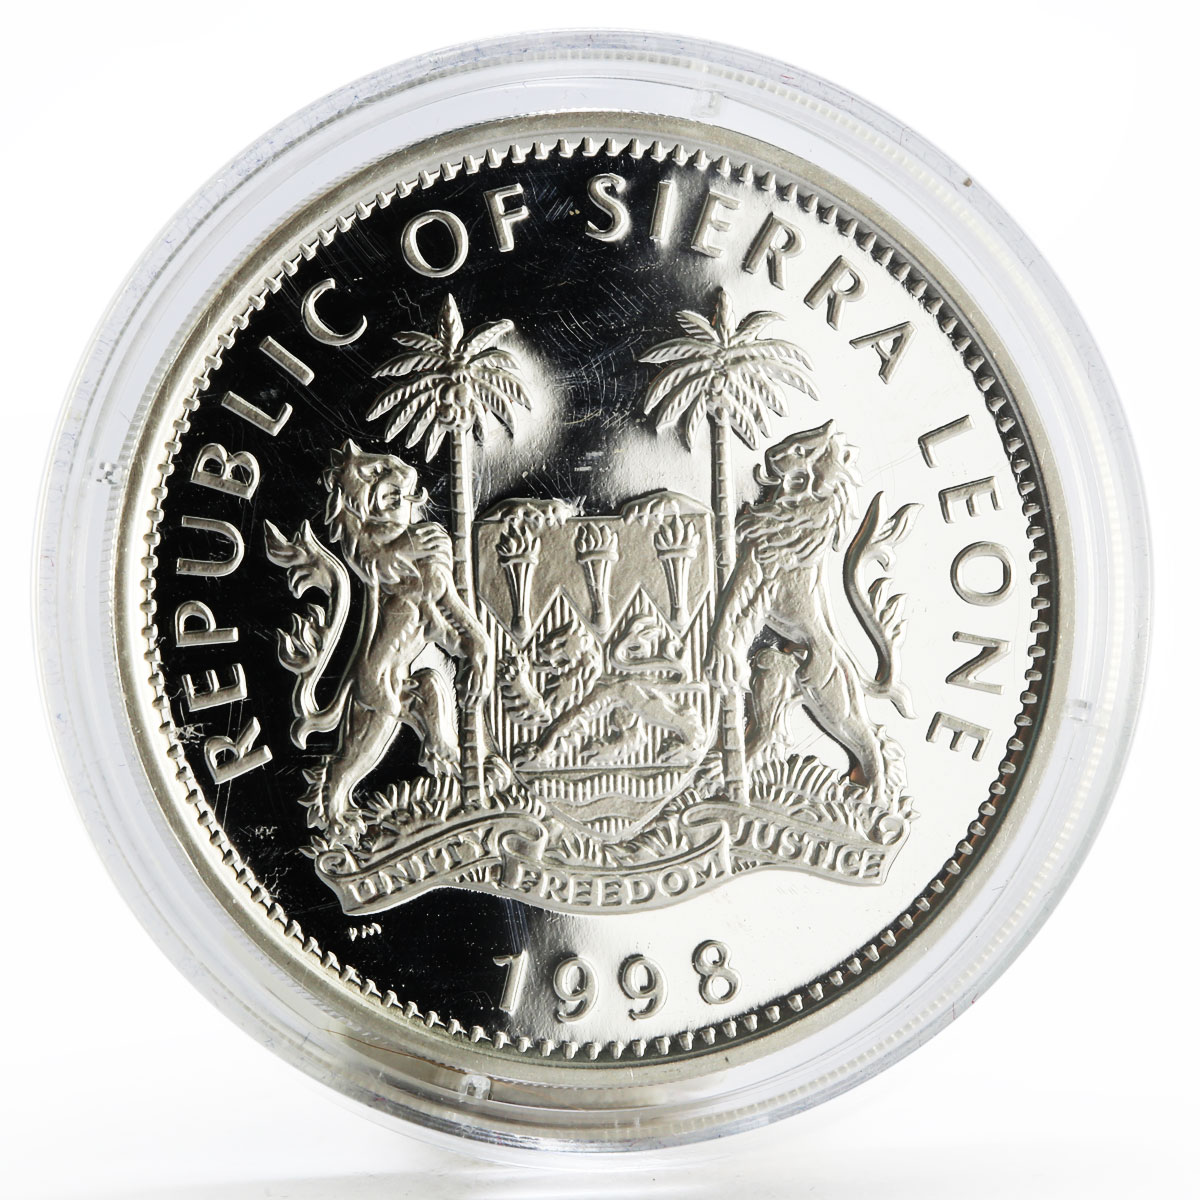 Sierra Leone 10 dollars British Missionary David Livingstone silver coin 1998